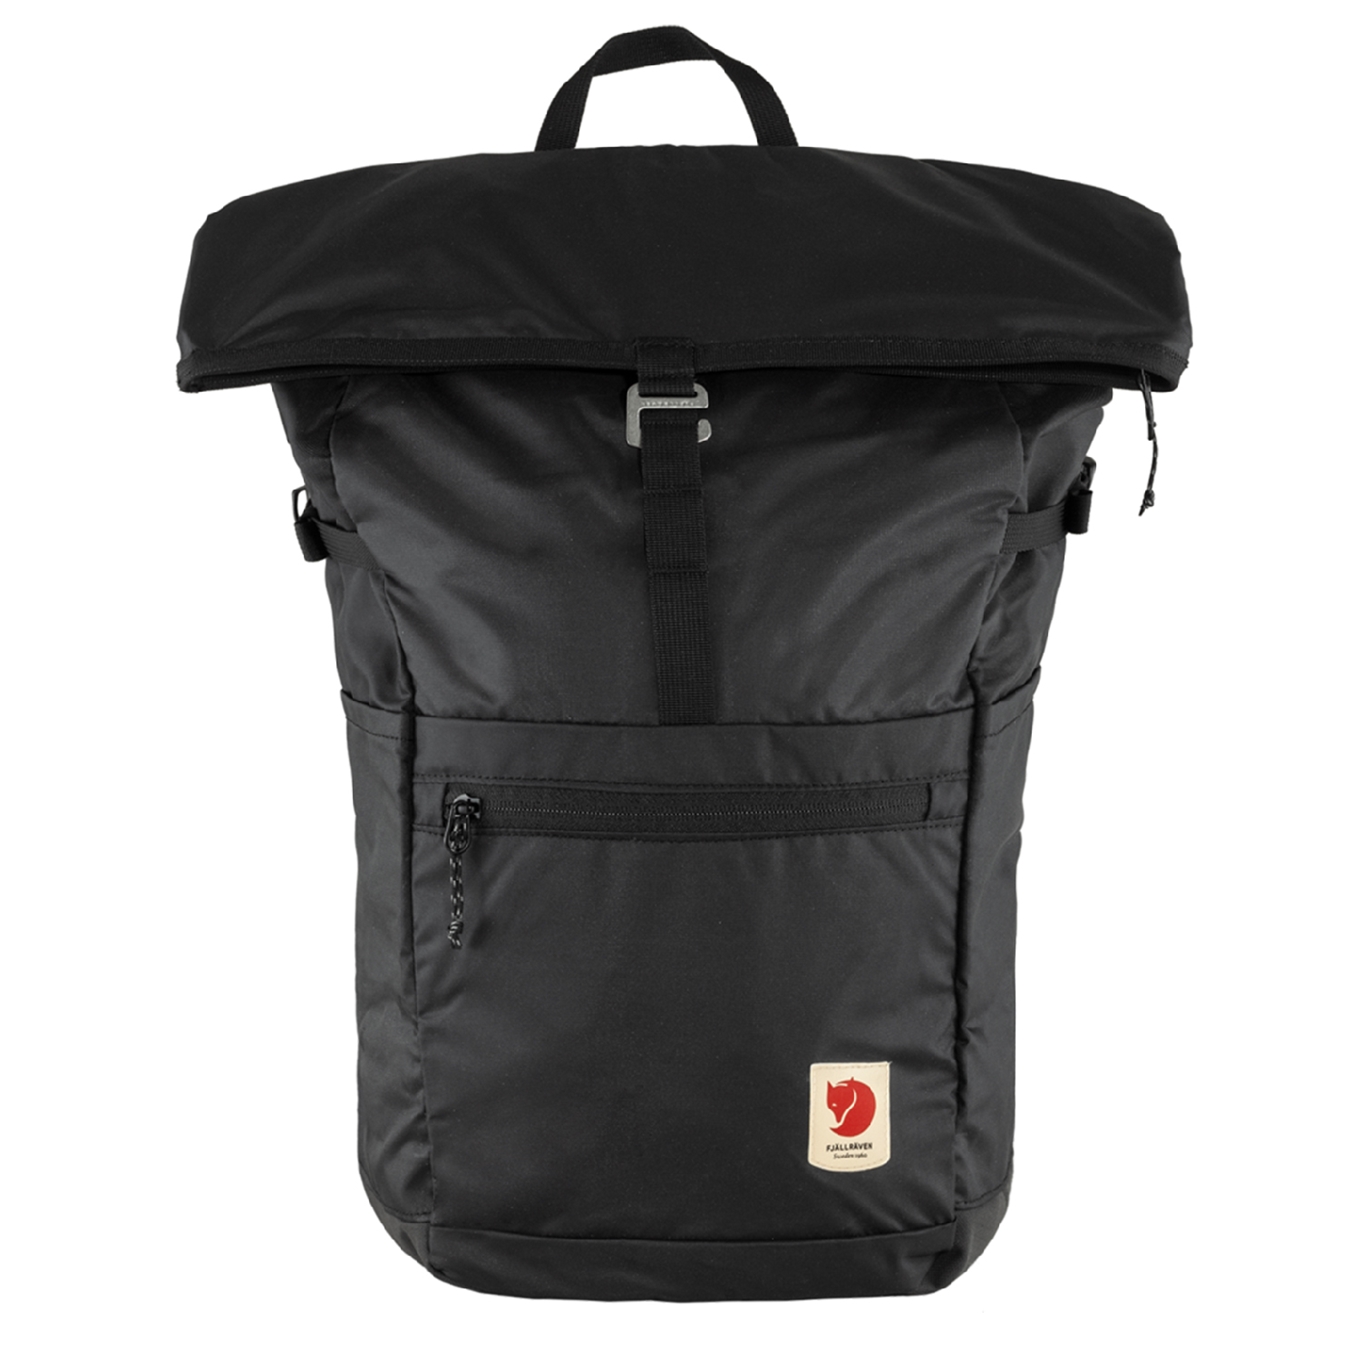 Fjallraven High Coast Foldsack 24 black backpack